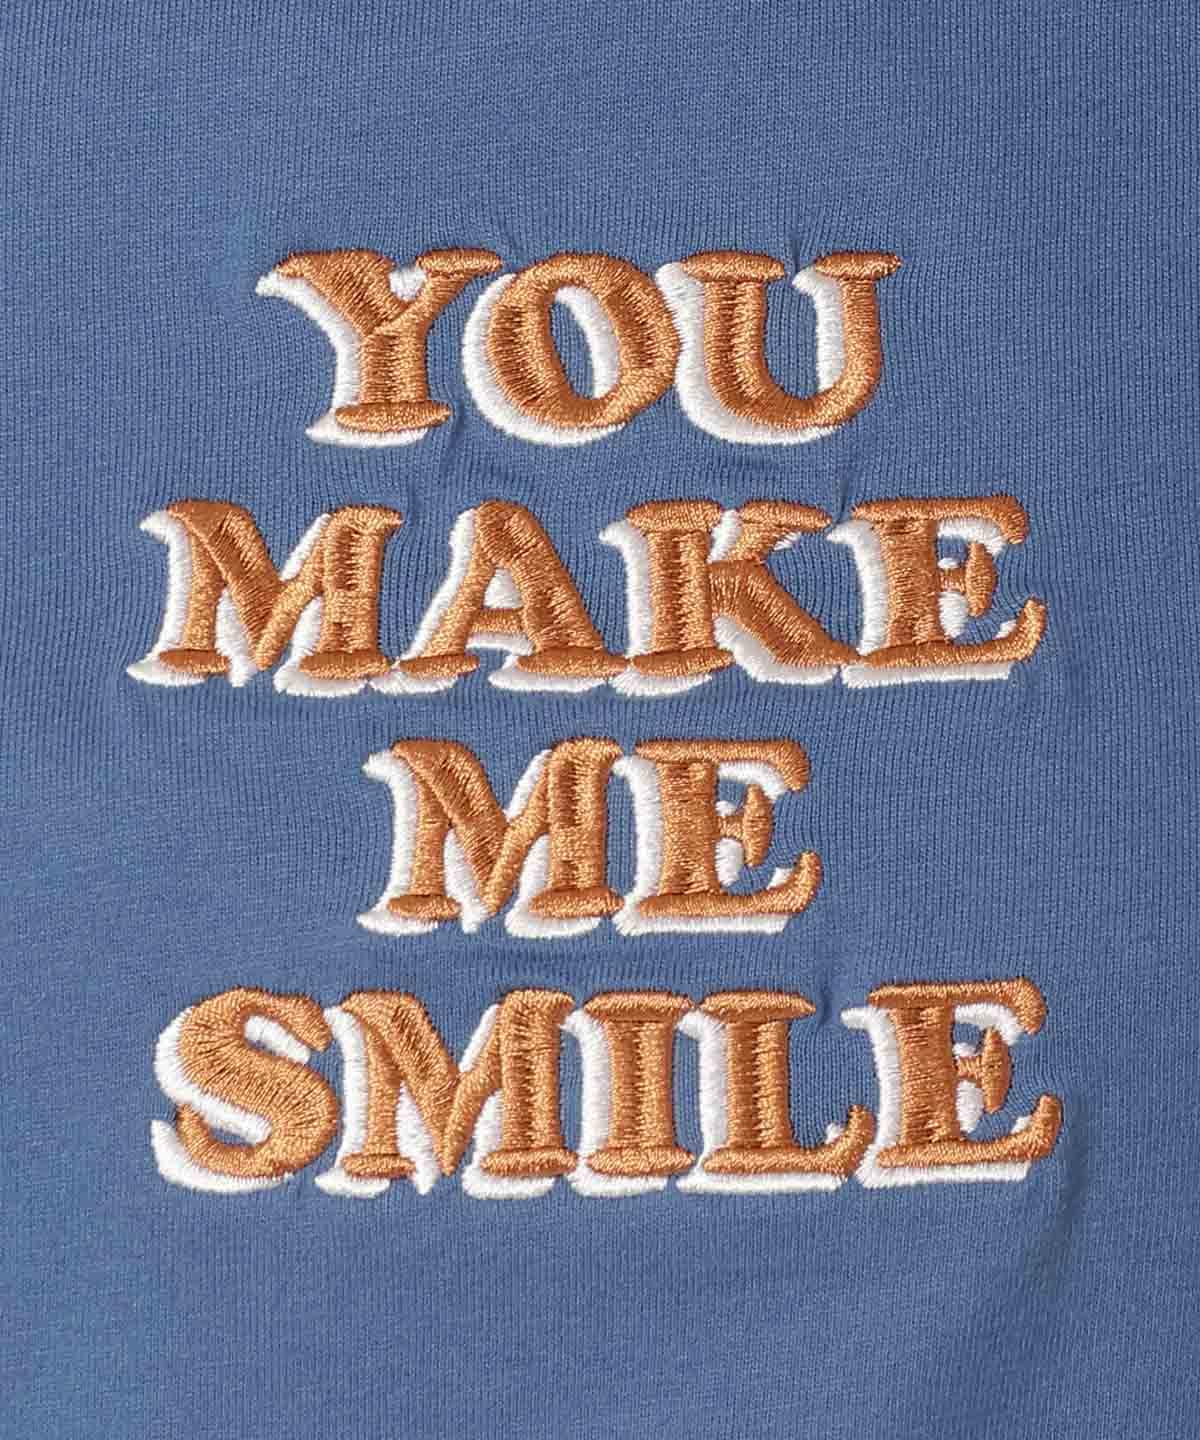 YOU MAKE ME SMILE 刺繍Tシャツ